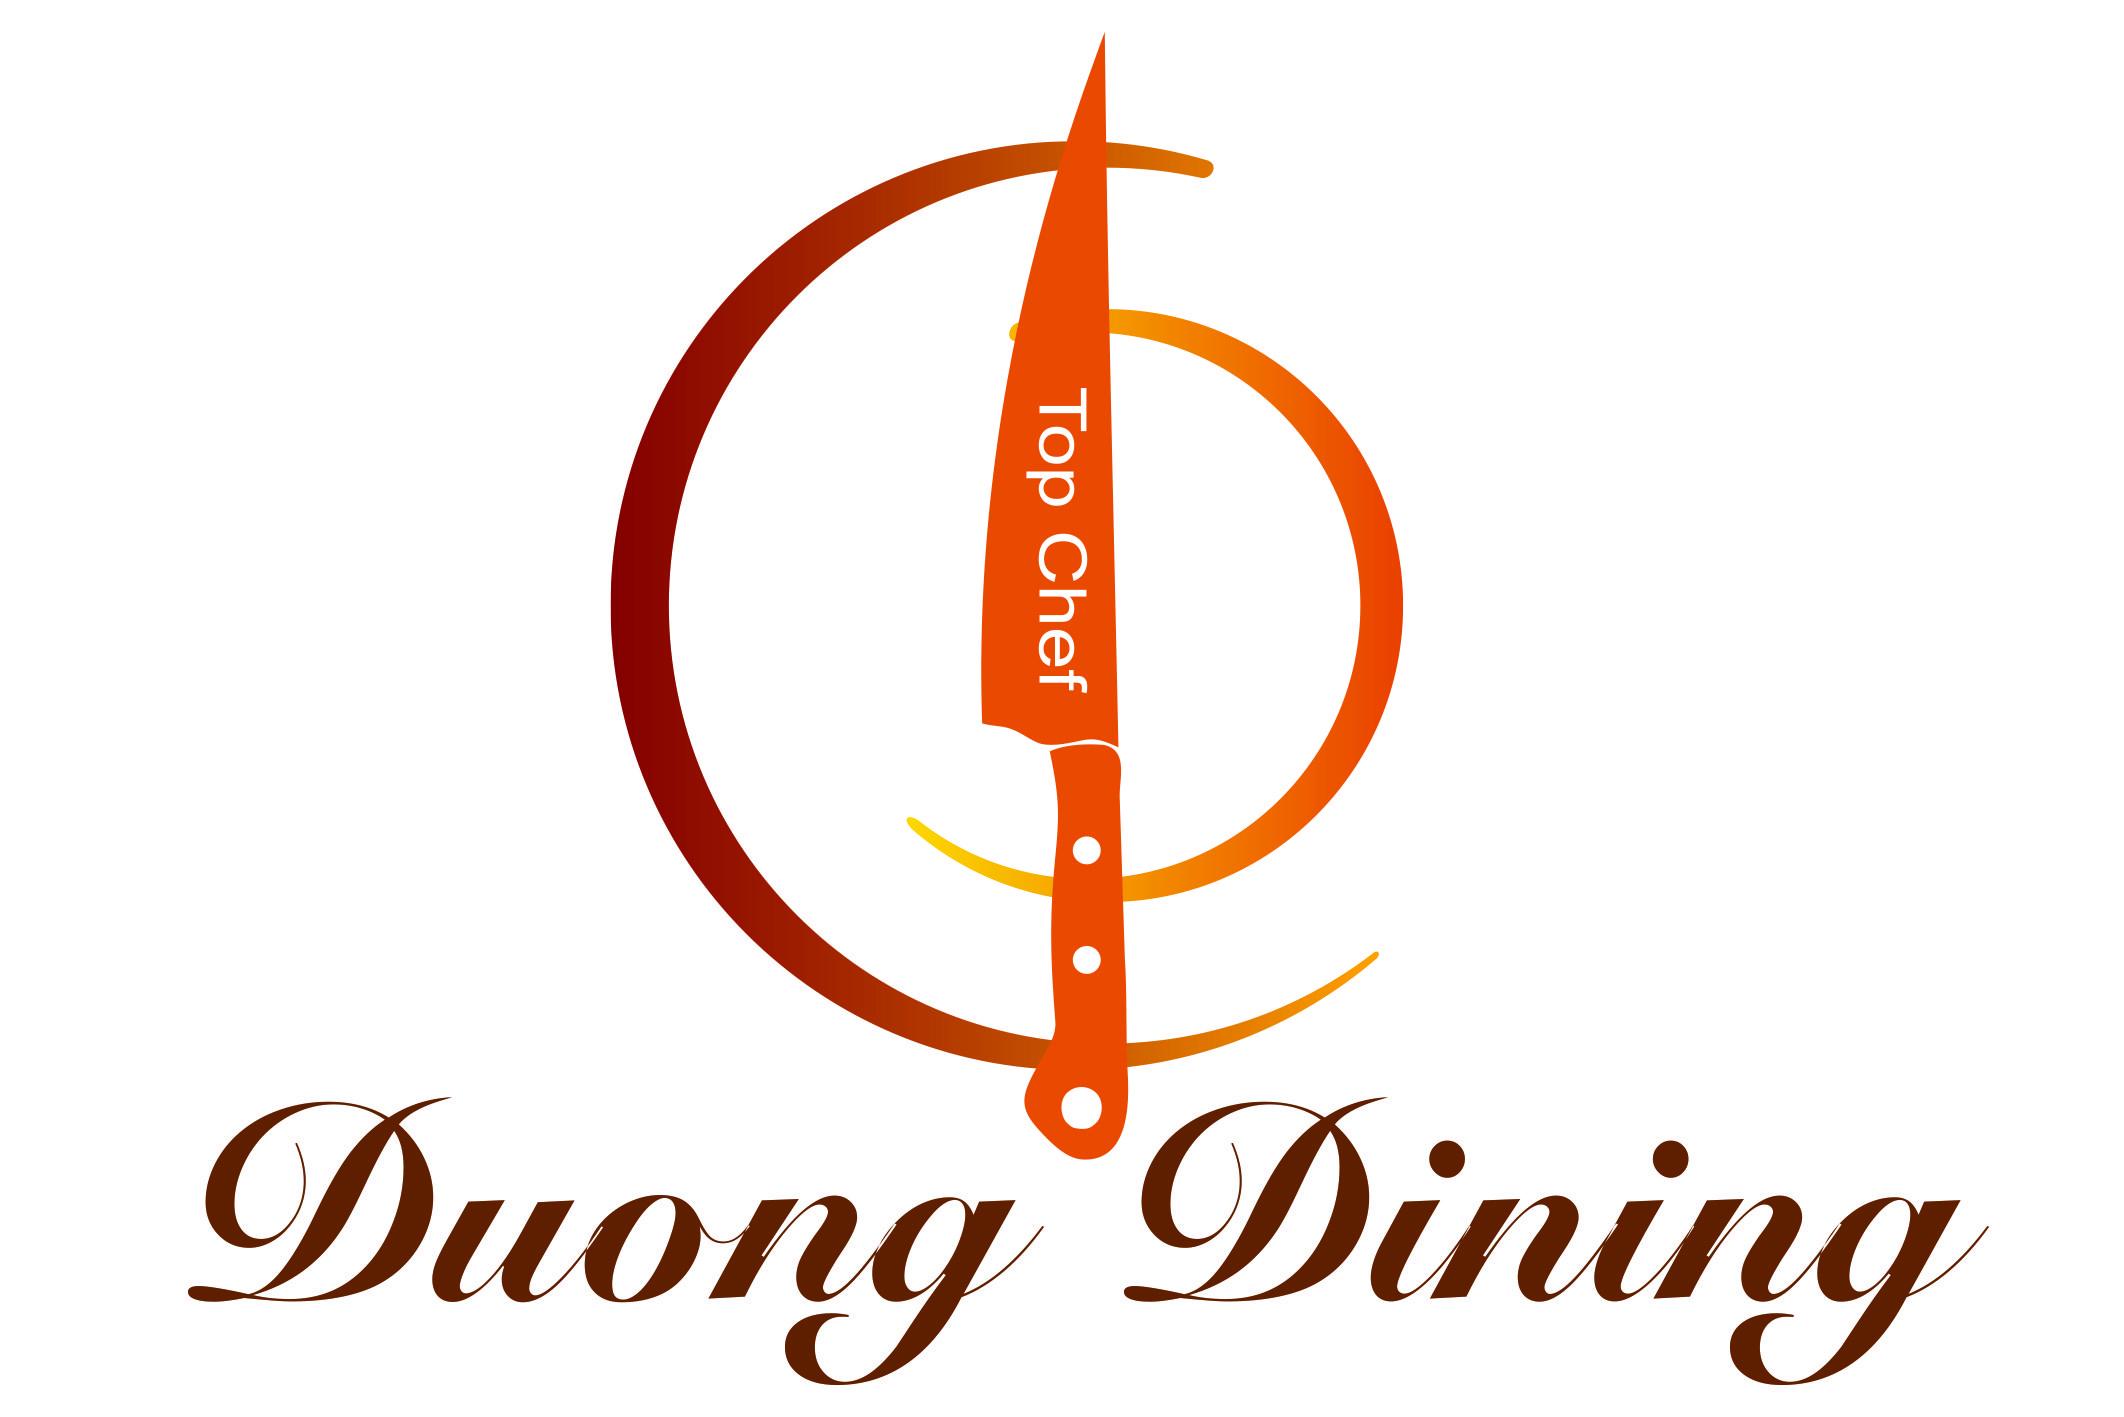 Duong Dining